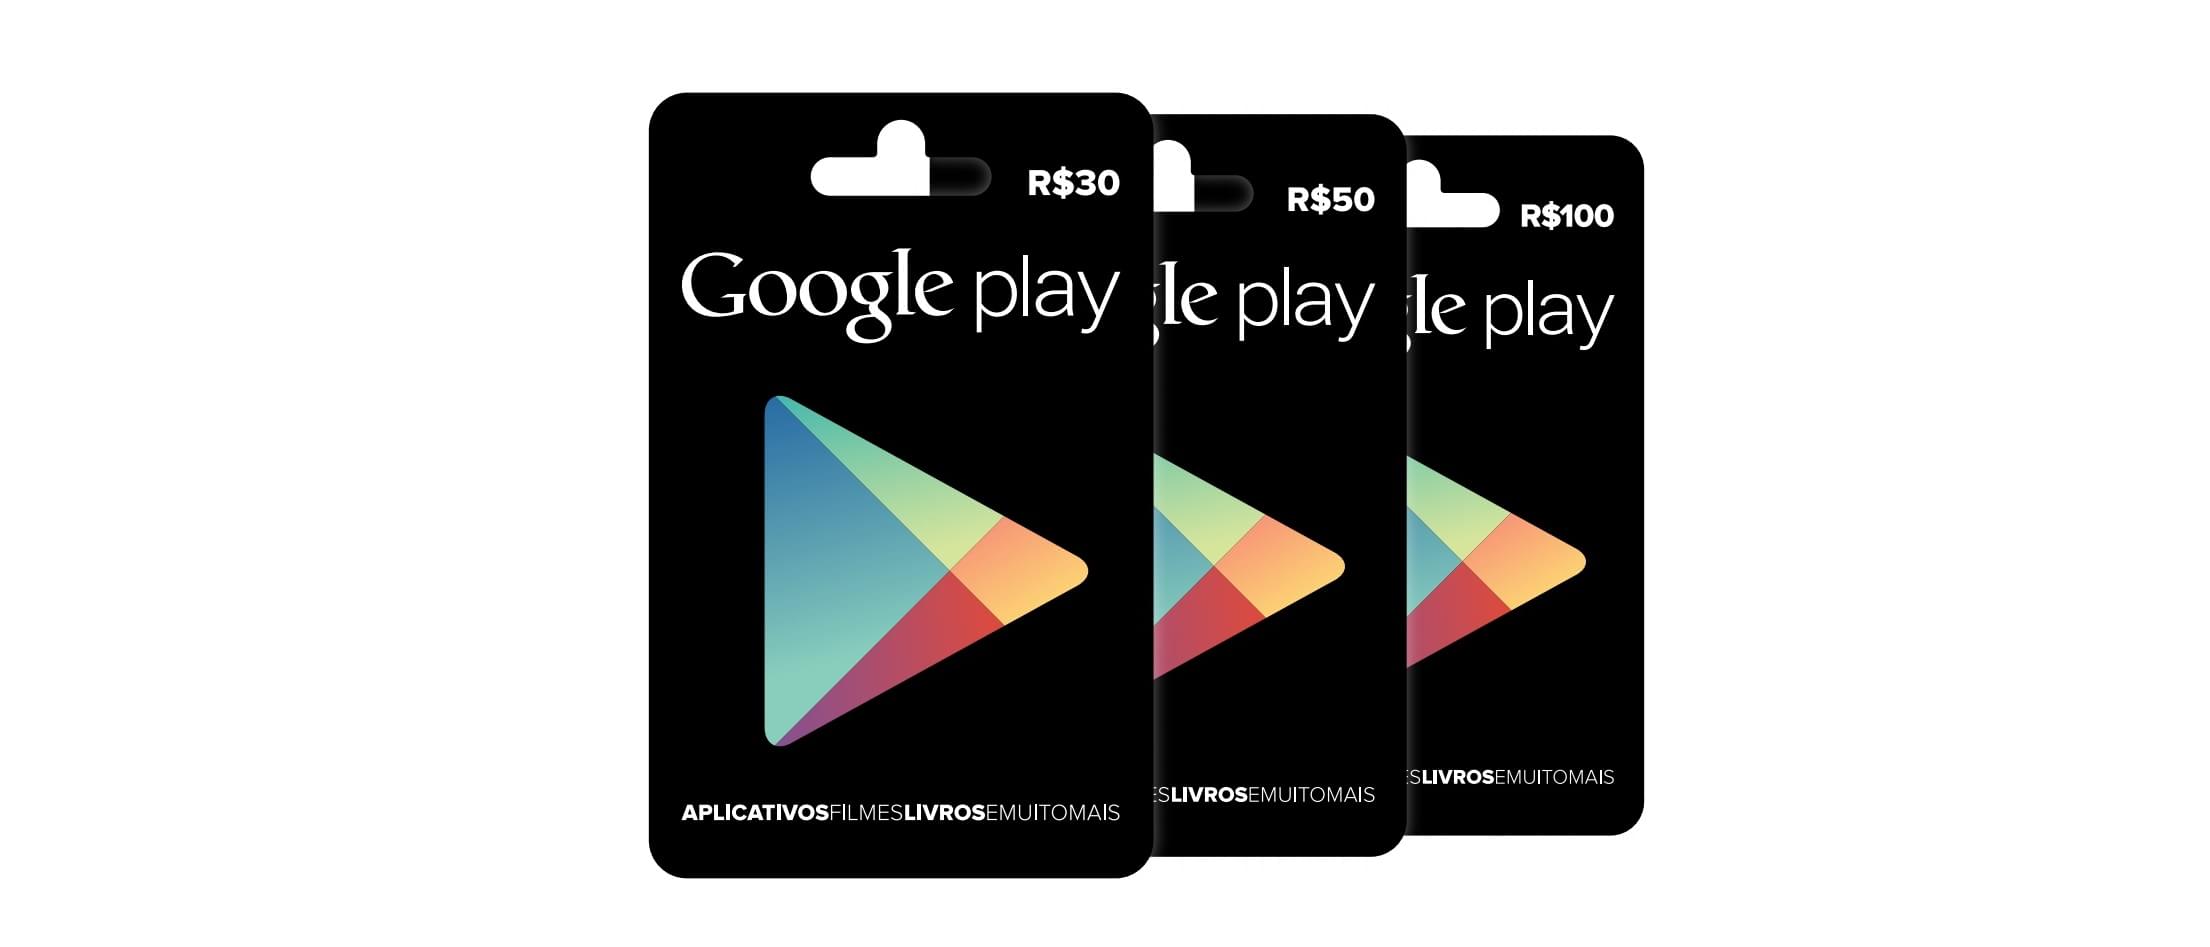 Google Play Gift Cards Brasileiros Podem Ser Encontrados A Partir De Hoje Tecmundo - roblox gift card americanas